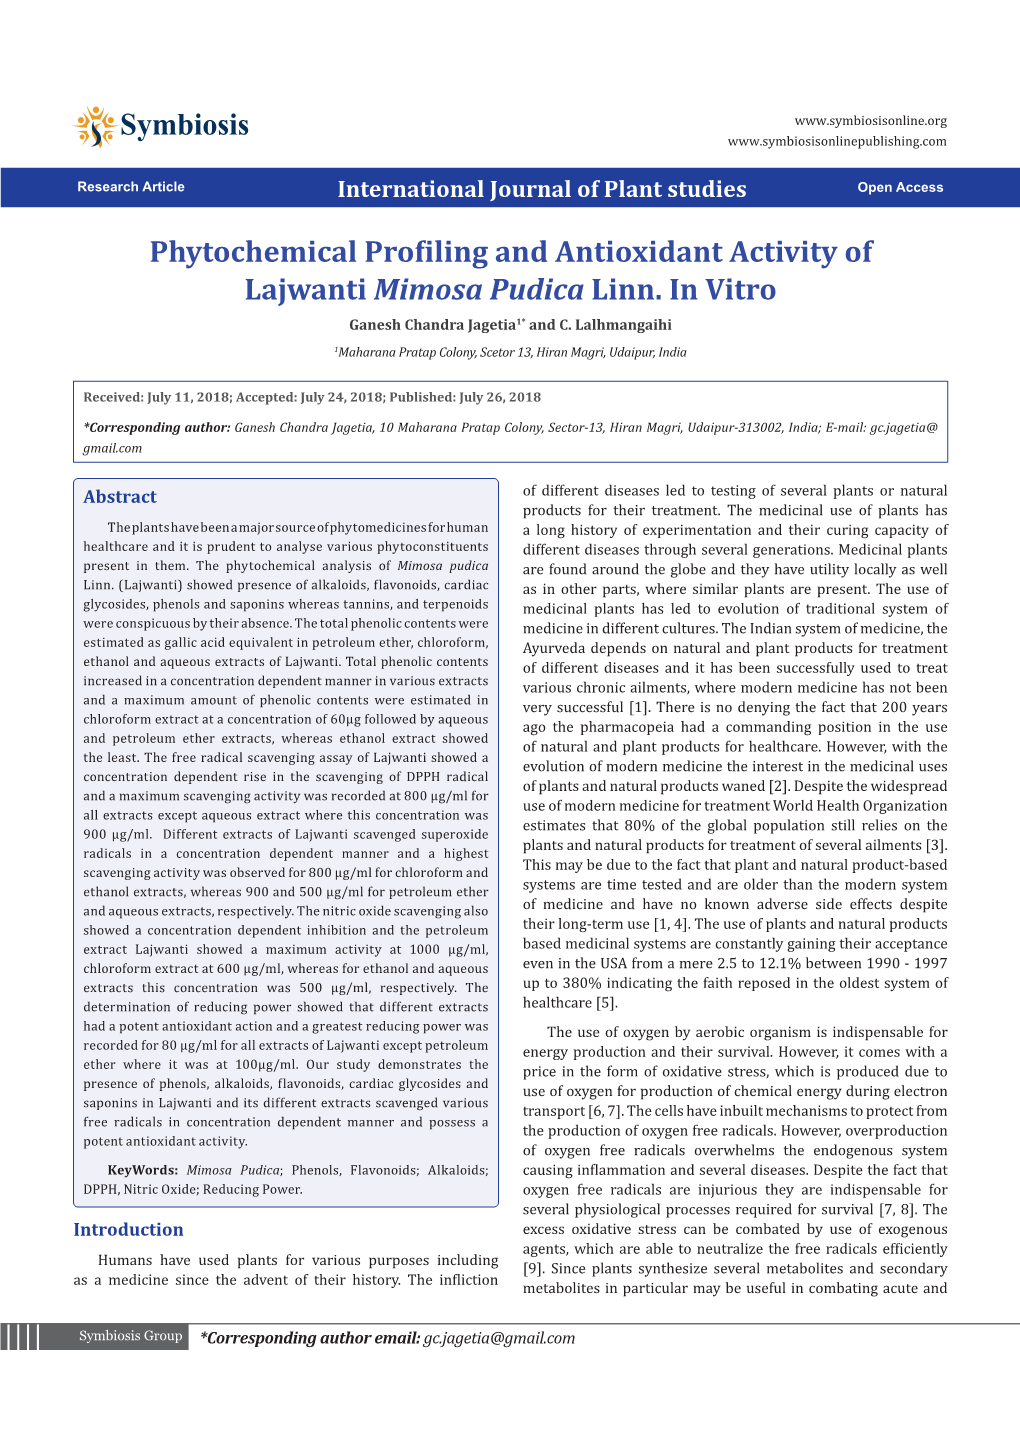 Phytochemical Profiling and Antioxidant Activity of Lajwanti Mimosa Pudica Linn